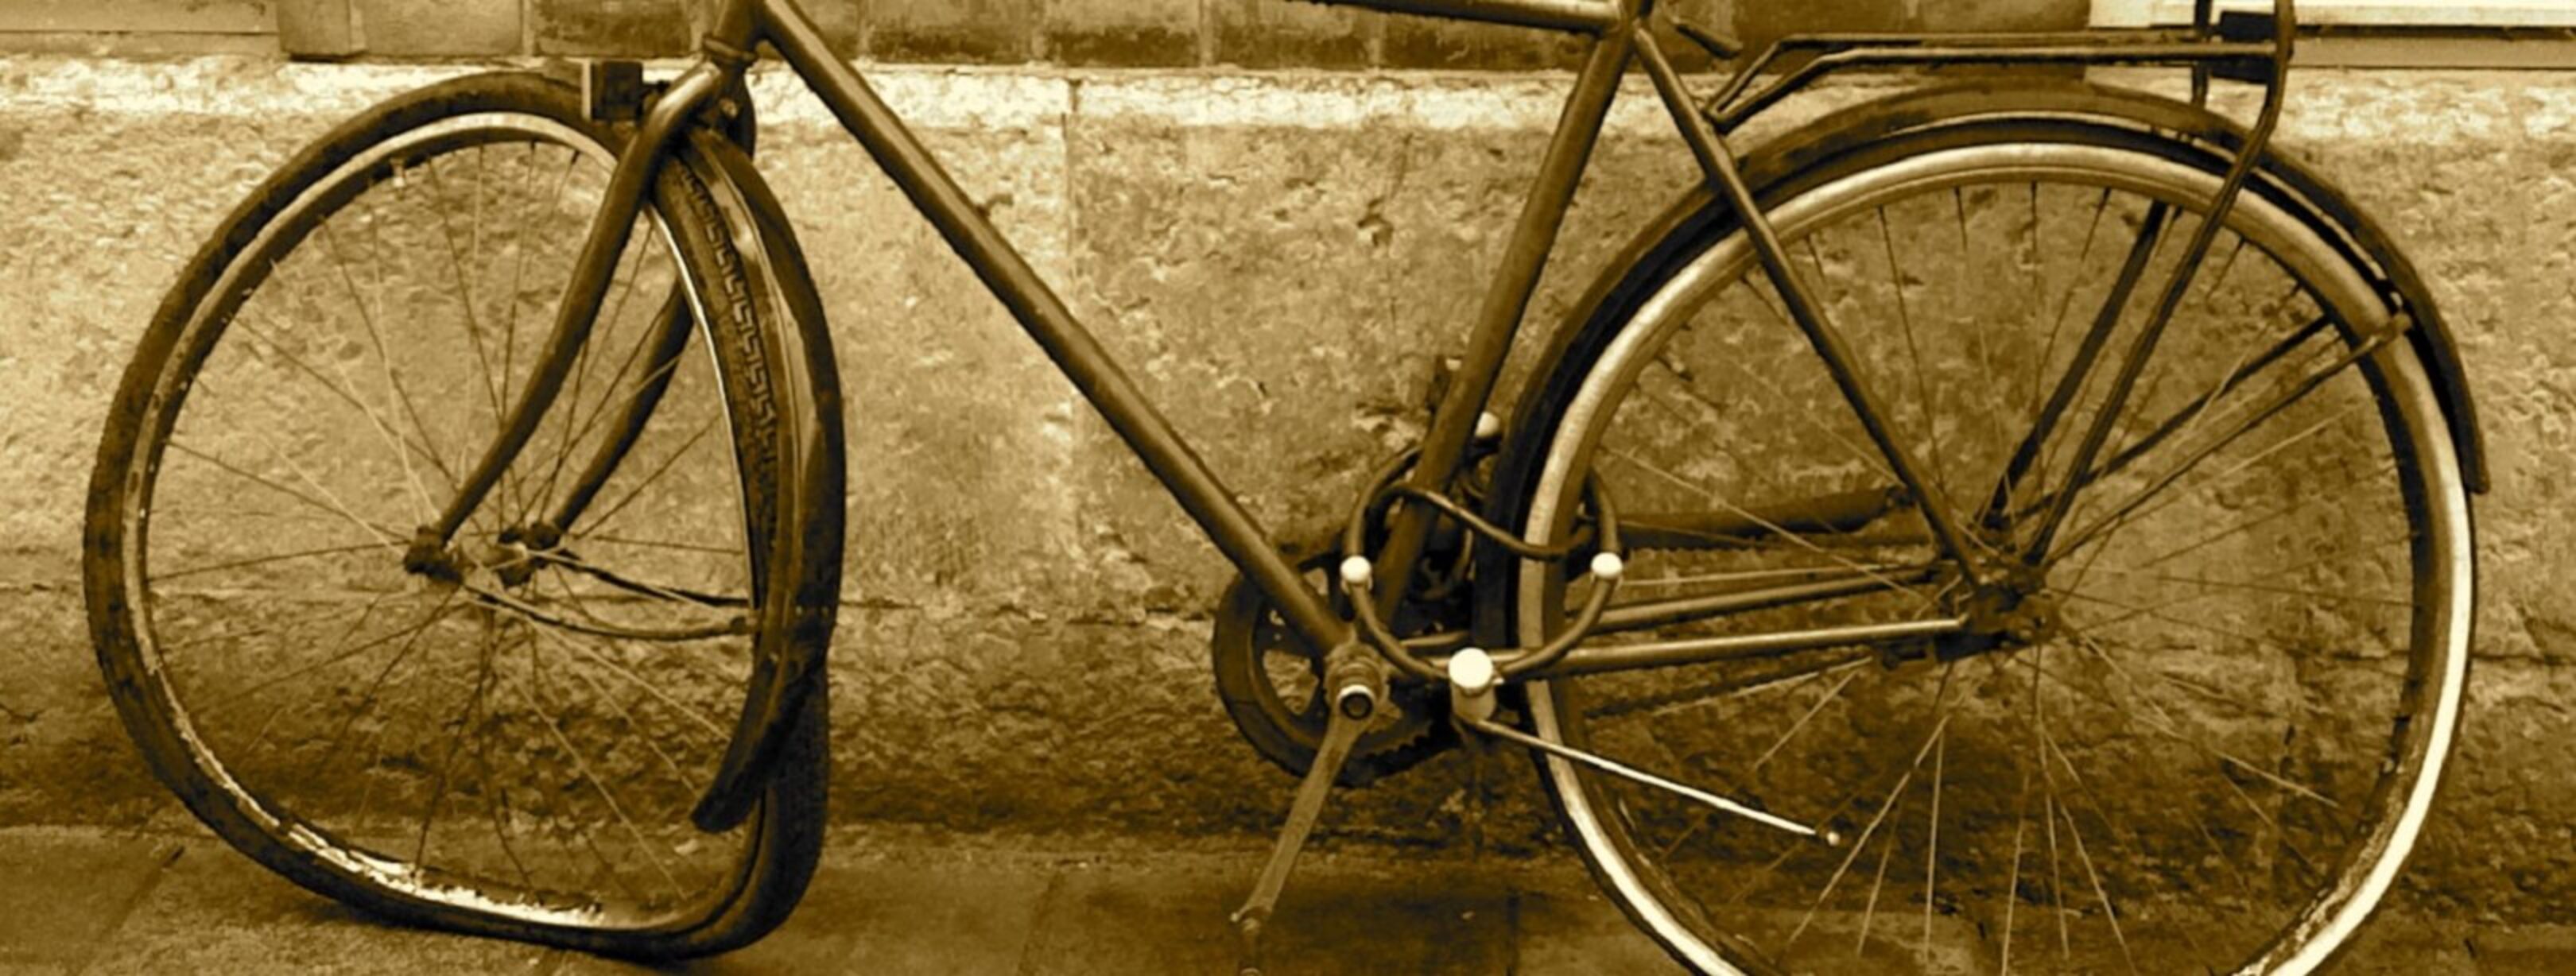 1620-Broken bike by Hildgrim via Flickr